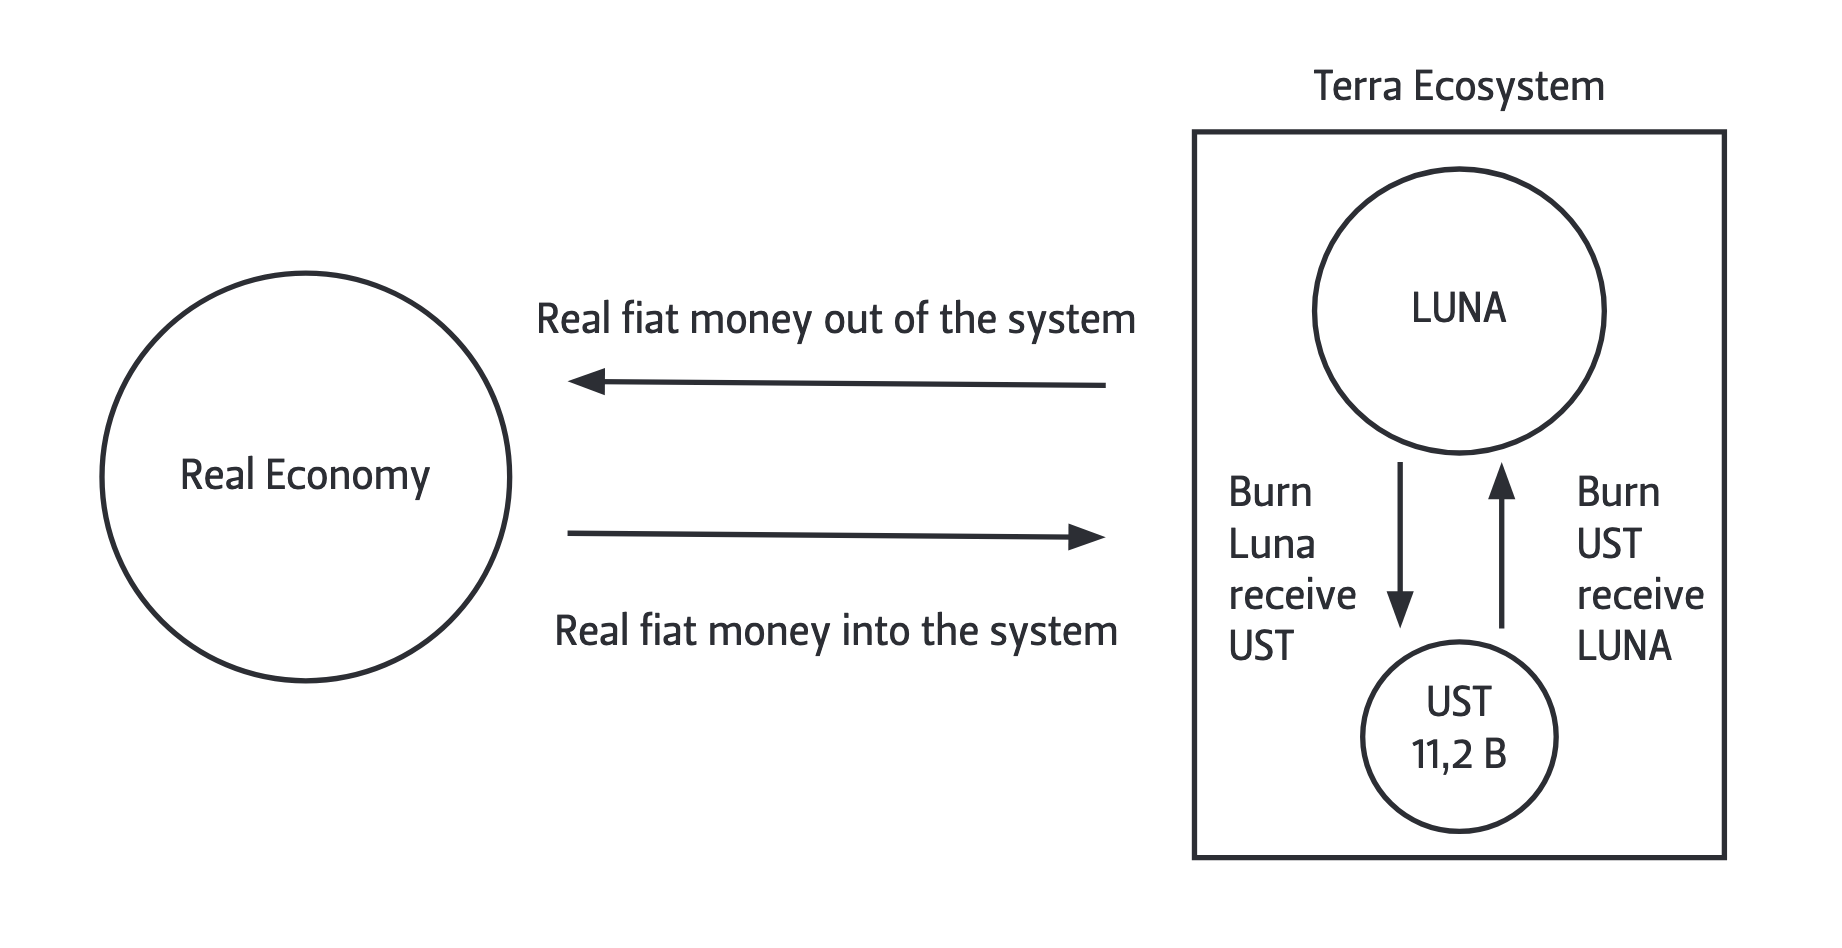 Figure 1 — Representation of the Terra Ecosystem